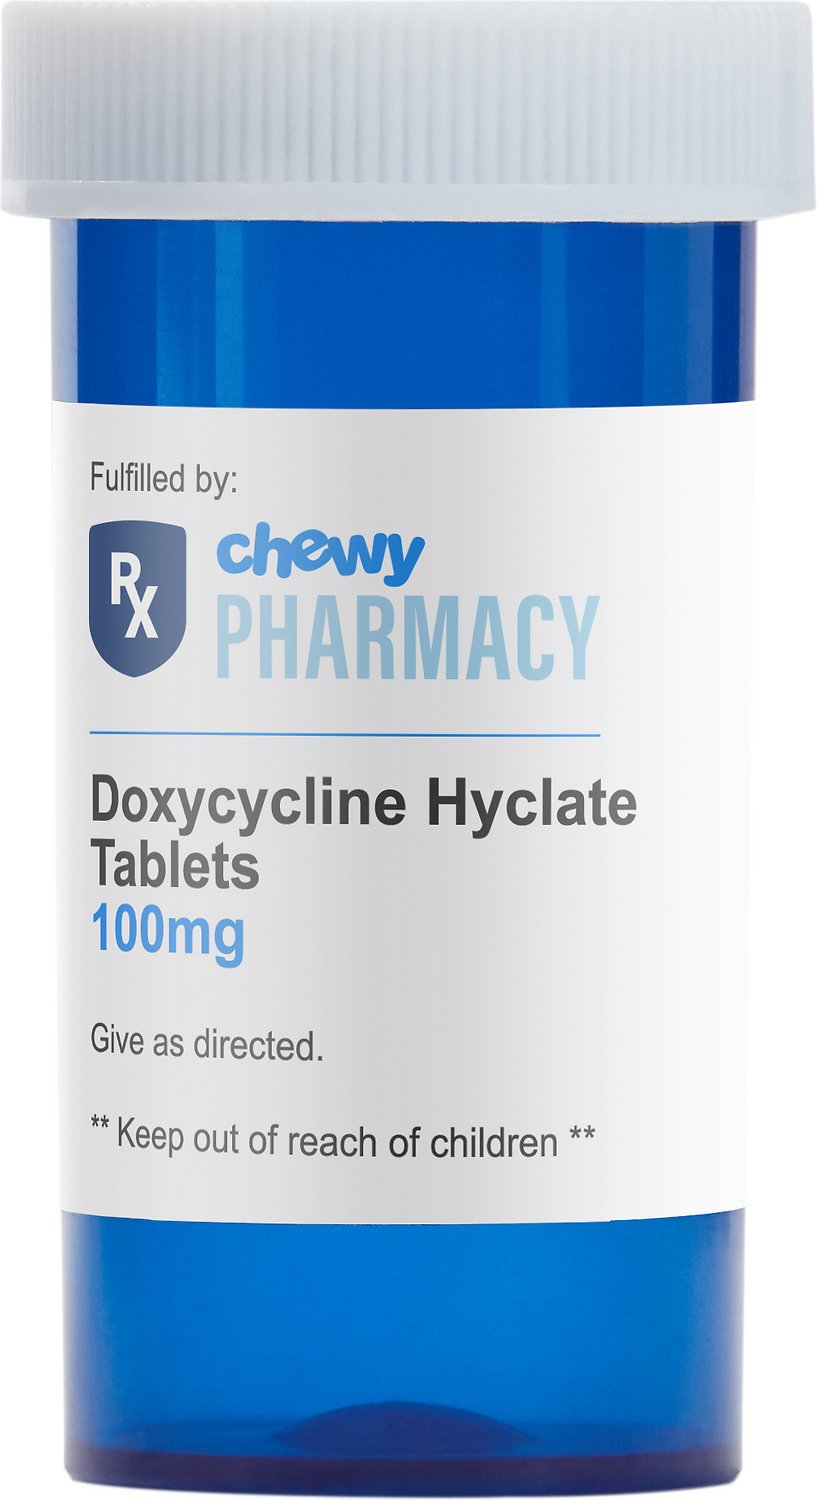 Fungsi dan Dosis Obat Doxycycline (2)